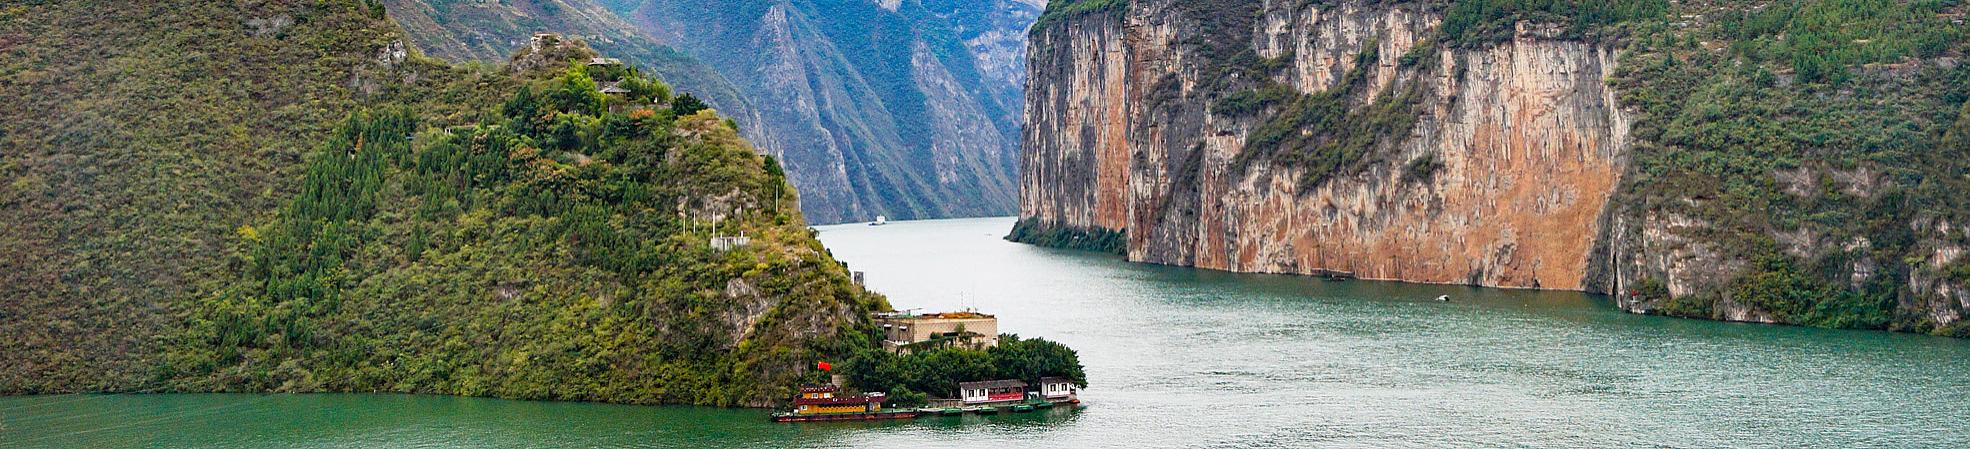 The Longest River in China - Yangtze River 